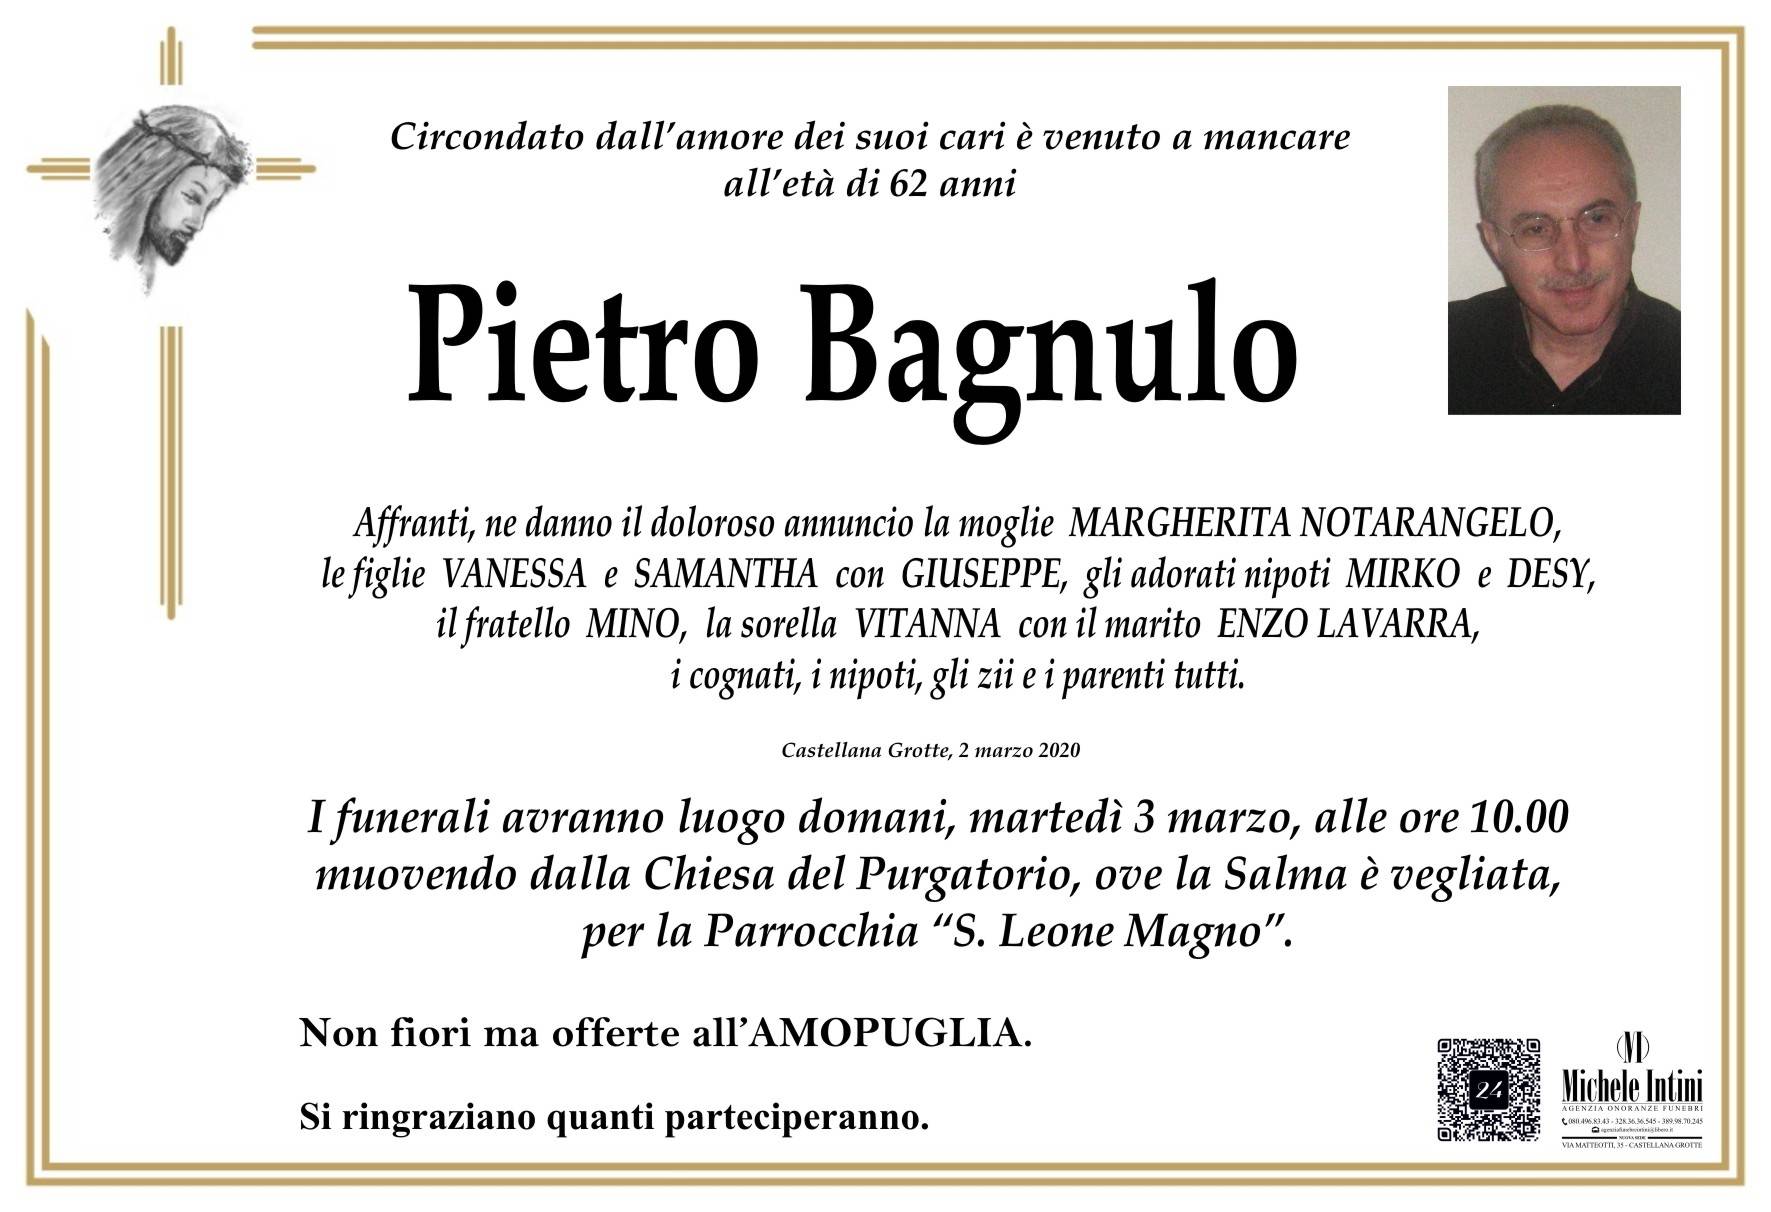 Pietro Bagnulo